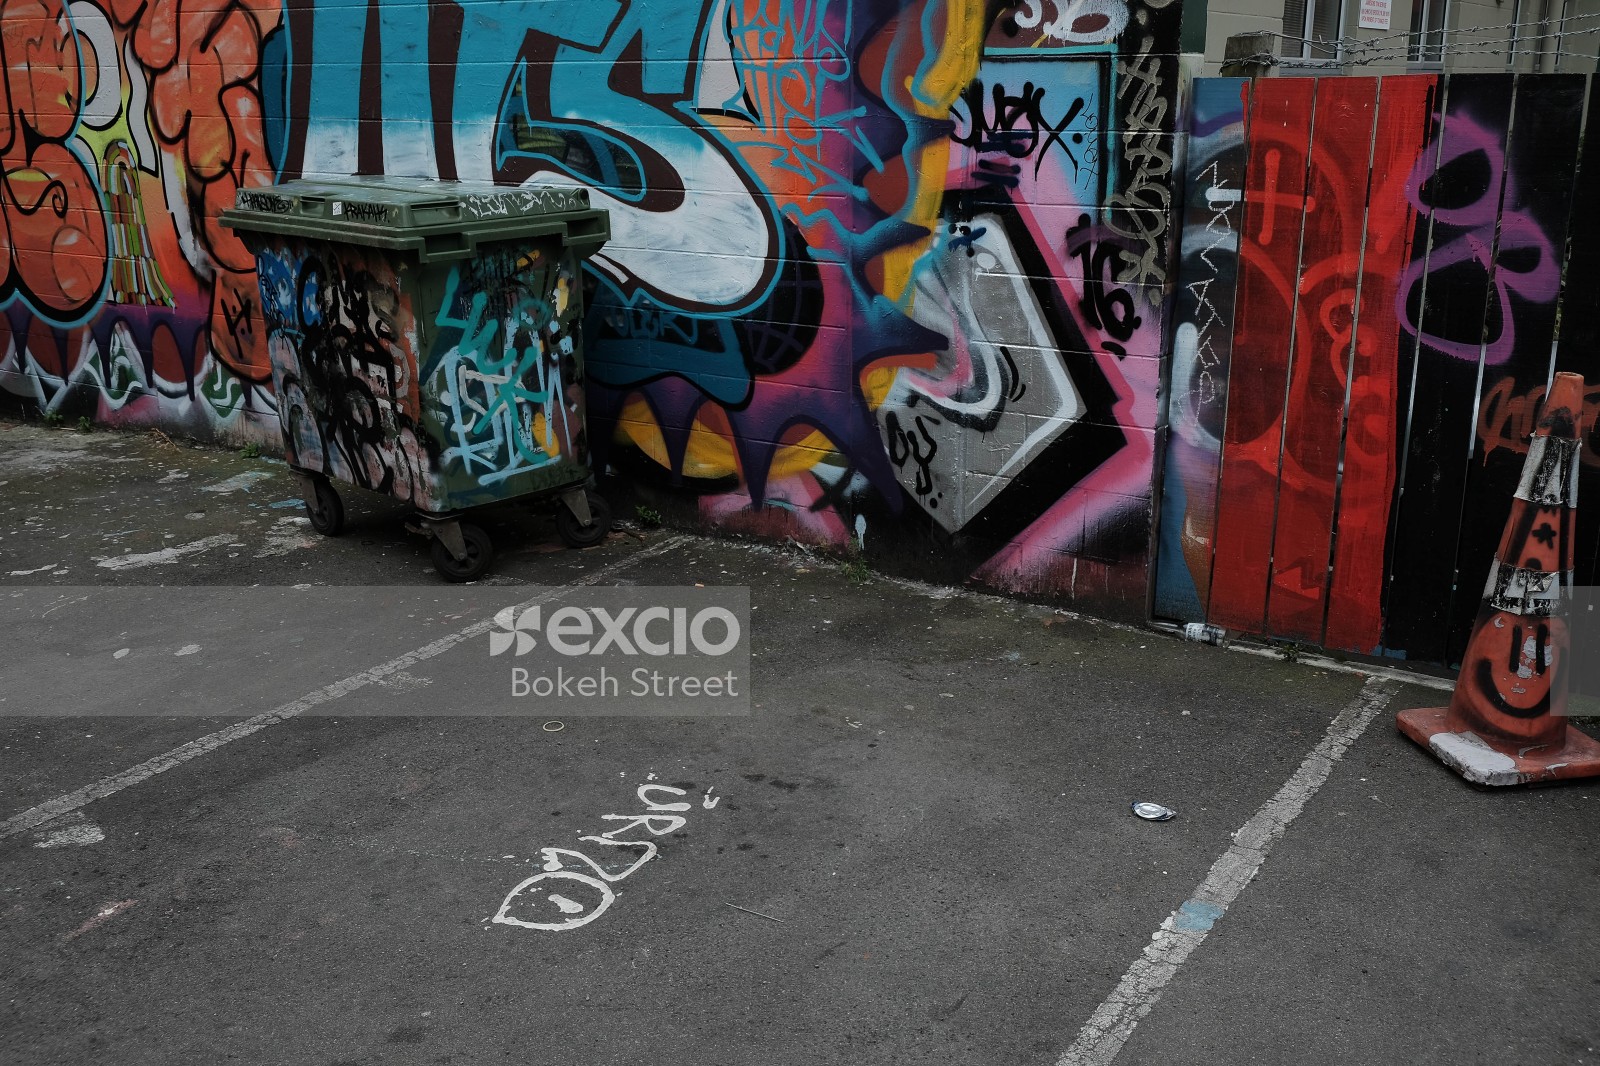 Graffitied wall and trash bin